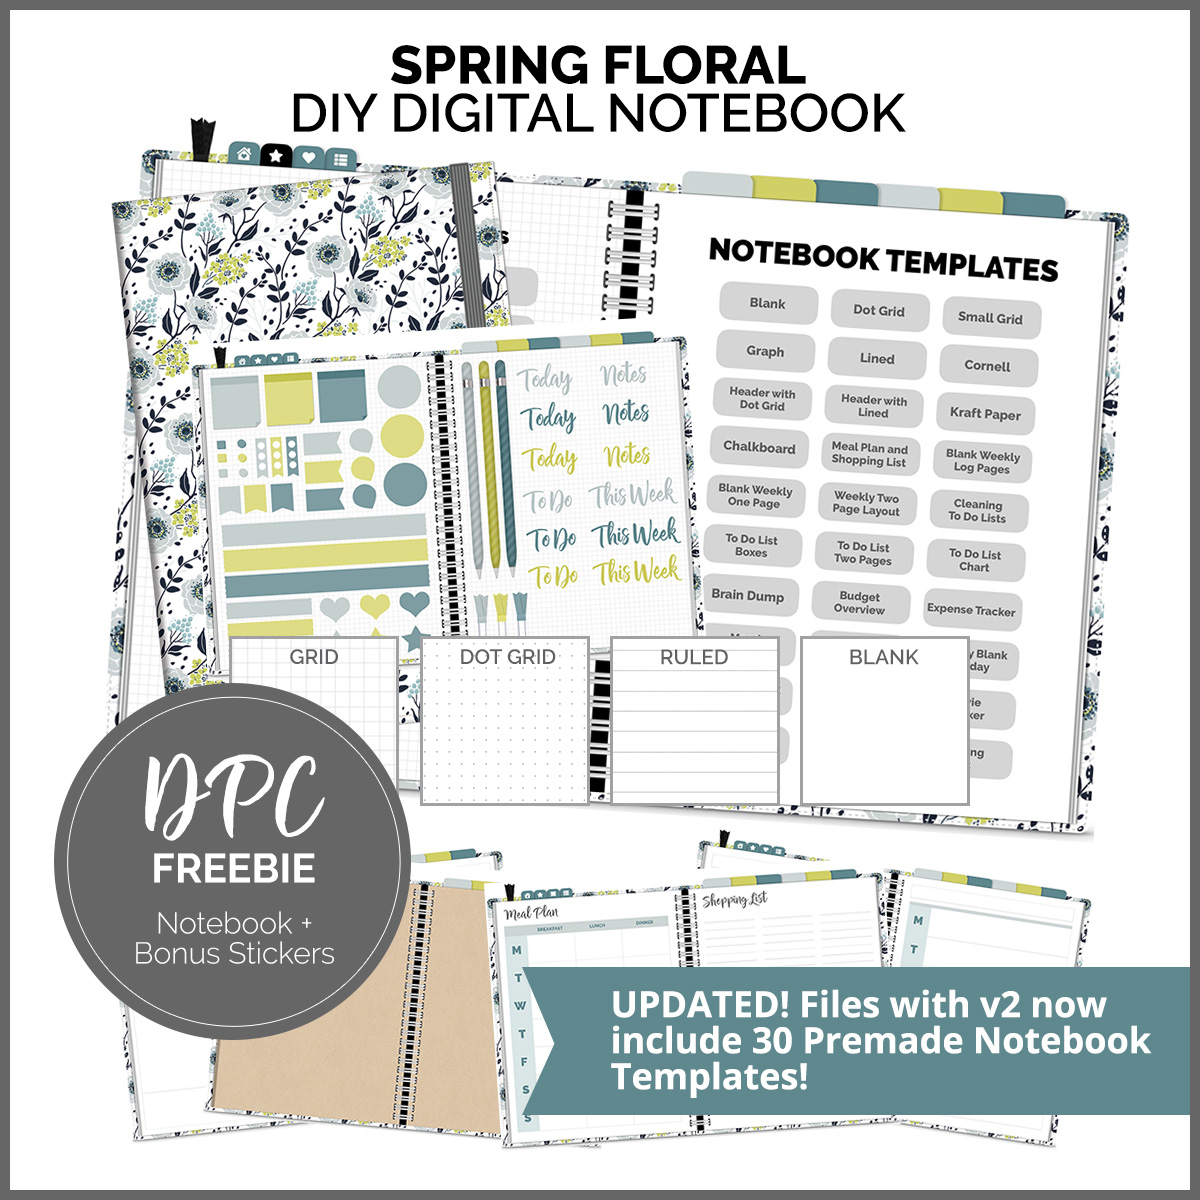 Digital Notebook Freebie - Spring Floral | @DigiPlannerCentral